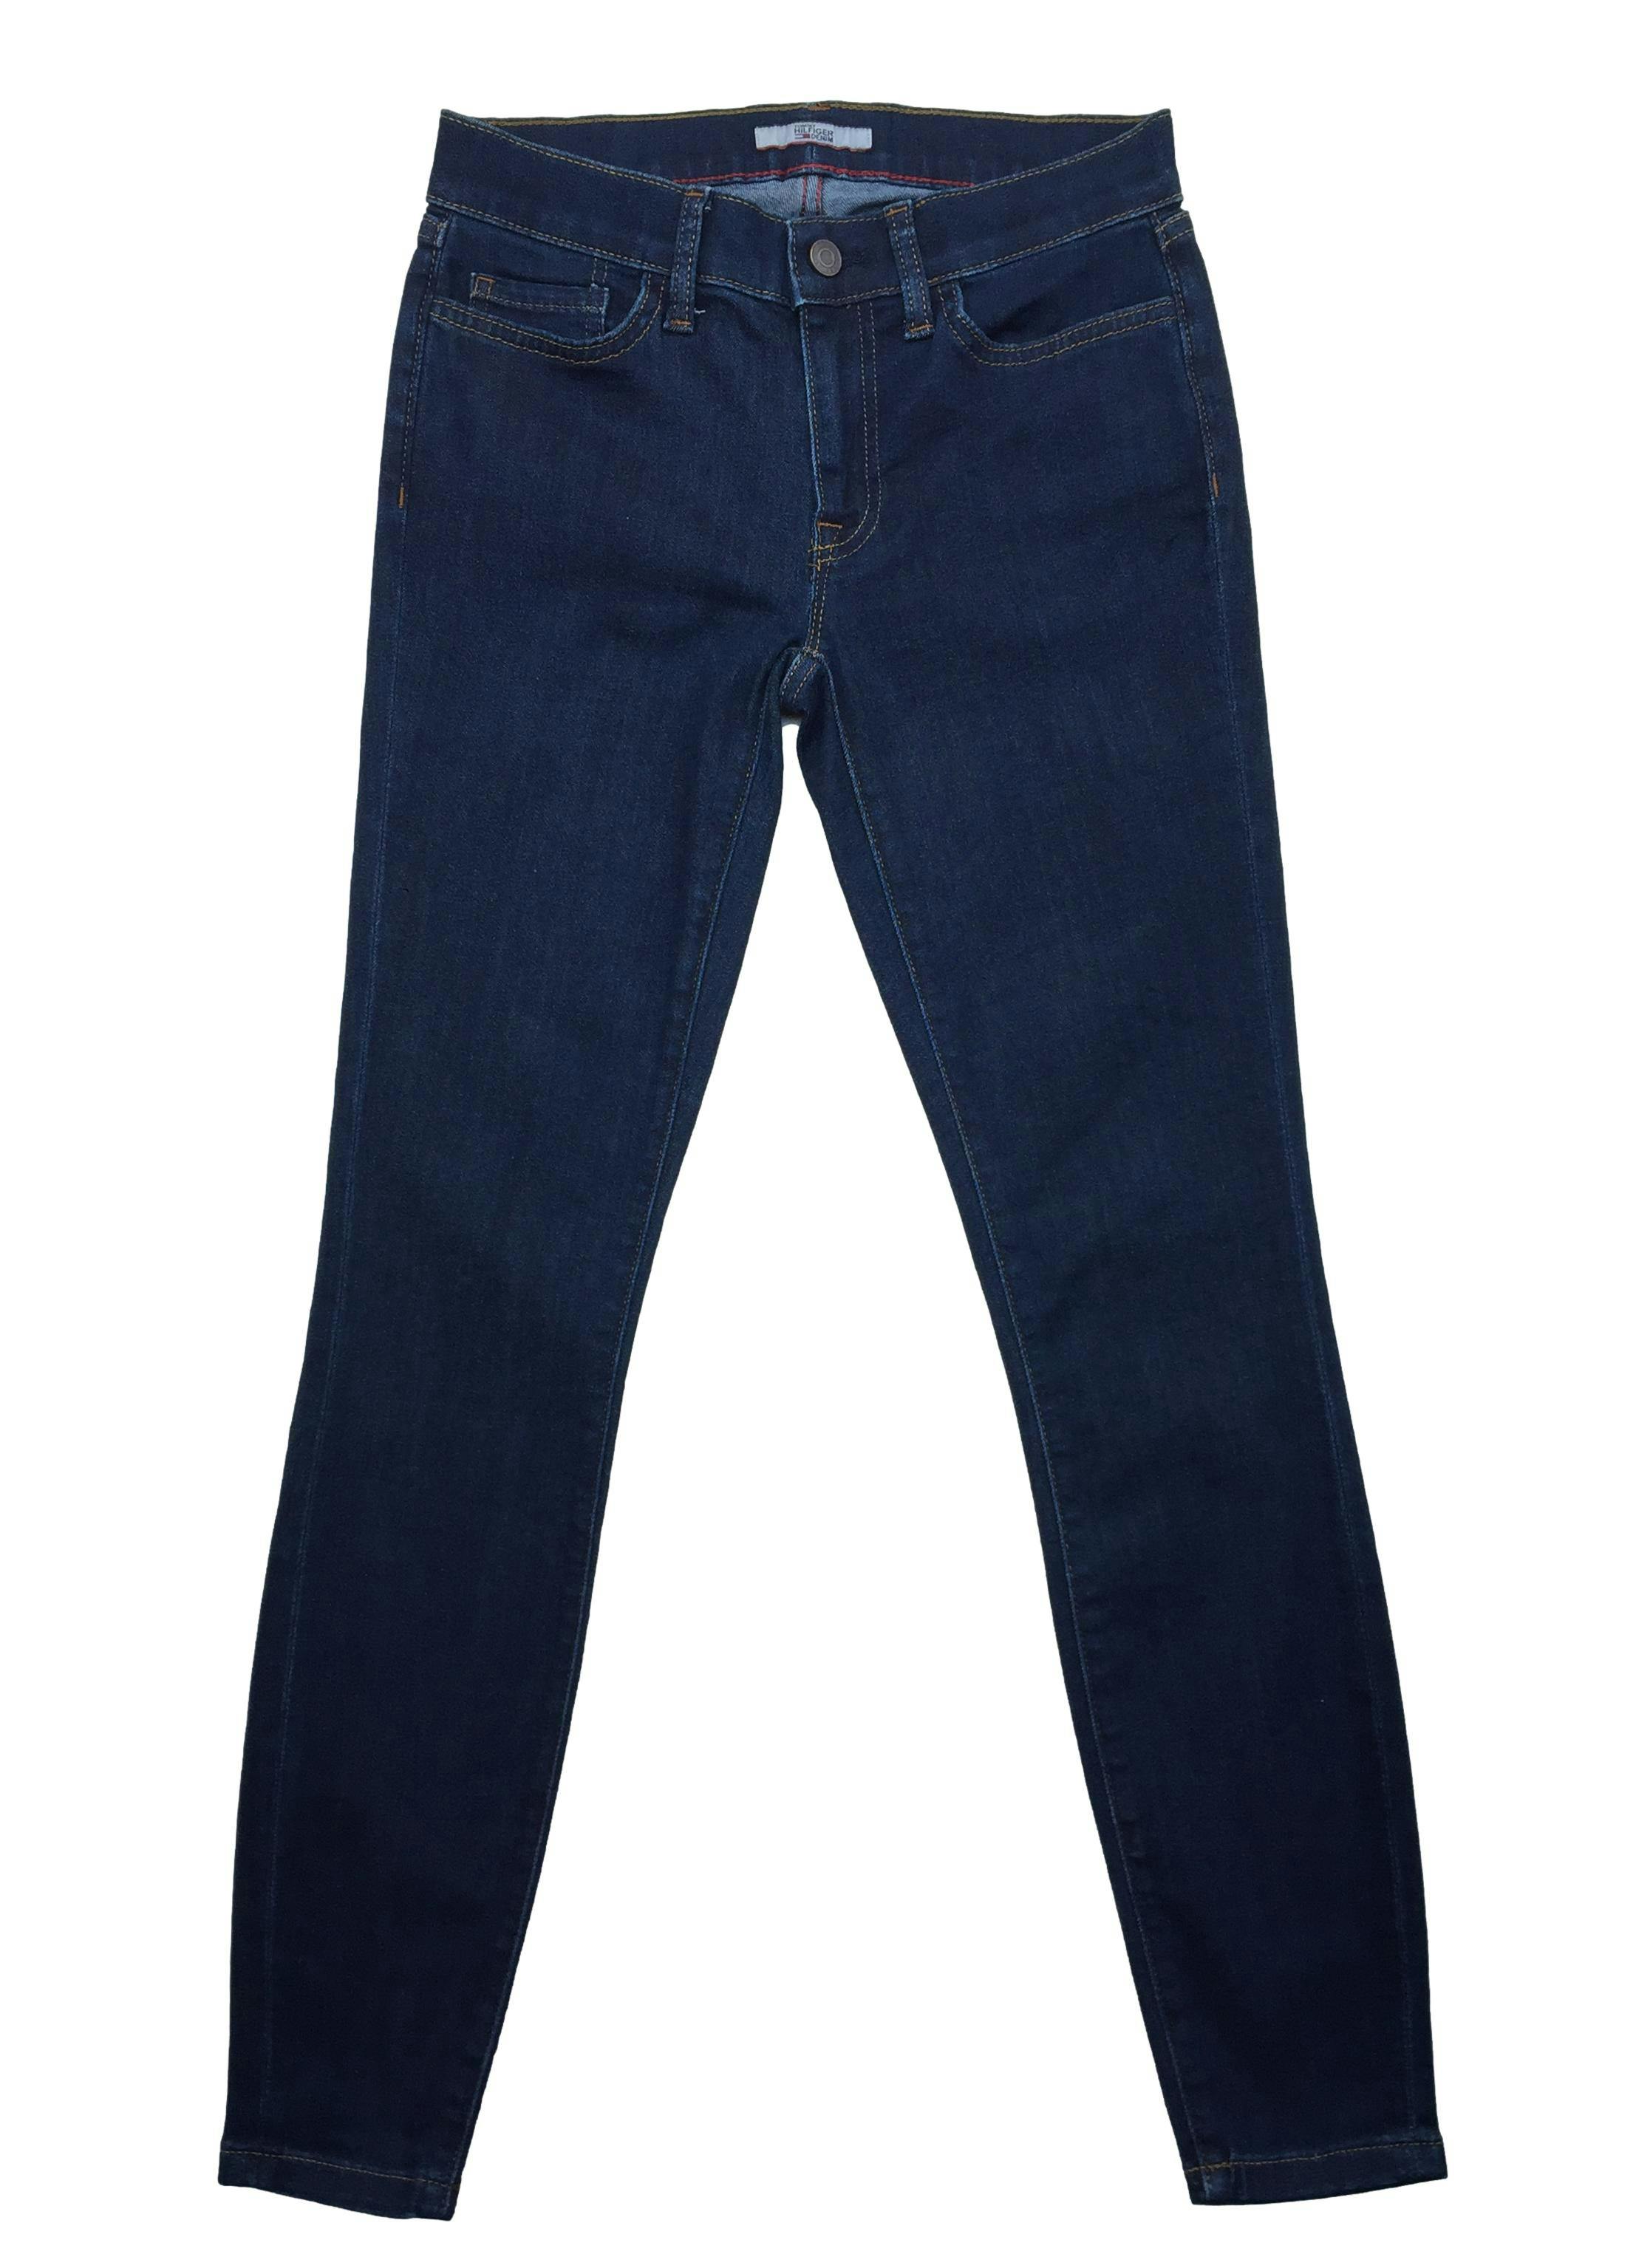 Skinny jean Tommy Hilfiger azul sólido 70% algodón, five pockets. Cintura 70cm Tiro 21cm Largo 95cm